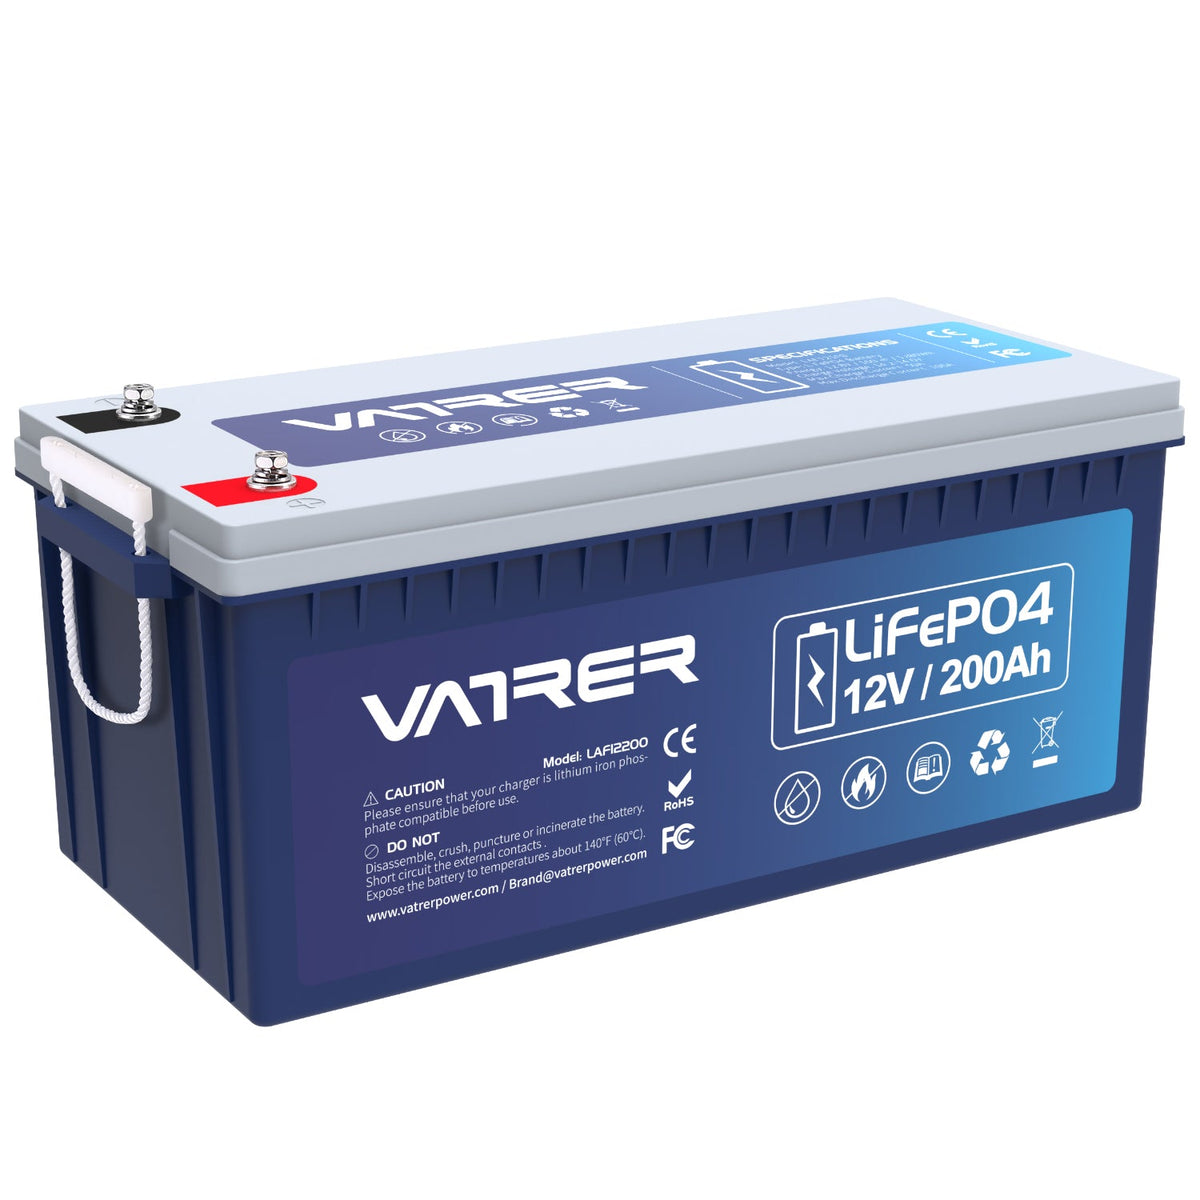 Vatler 12V 200Ah LiFePO4 リチウム電池、内蔵 200A BMS および低温カットオフ LiFePO4 電池